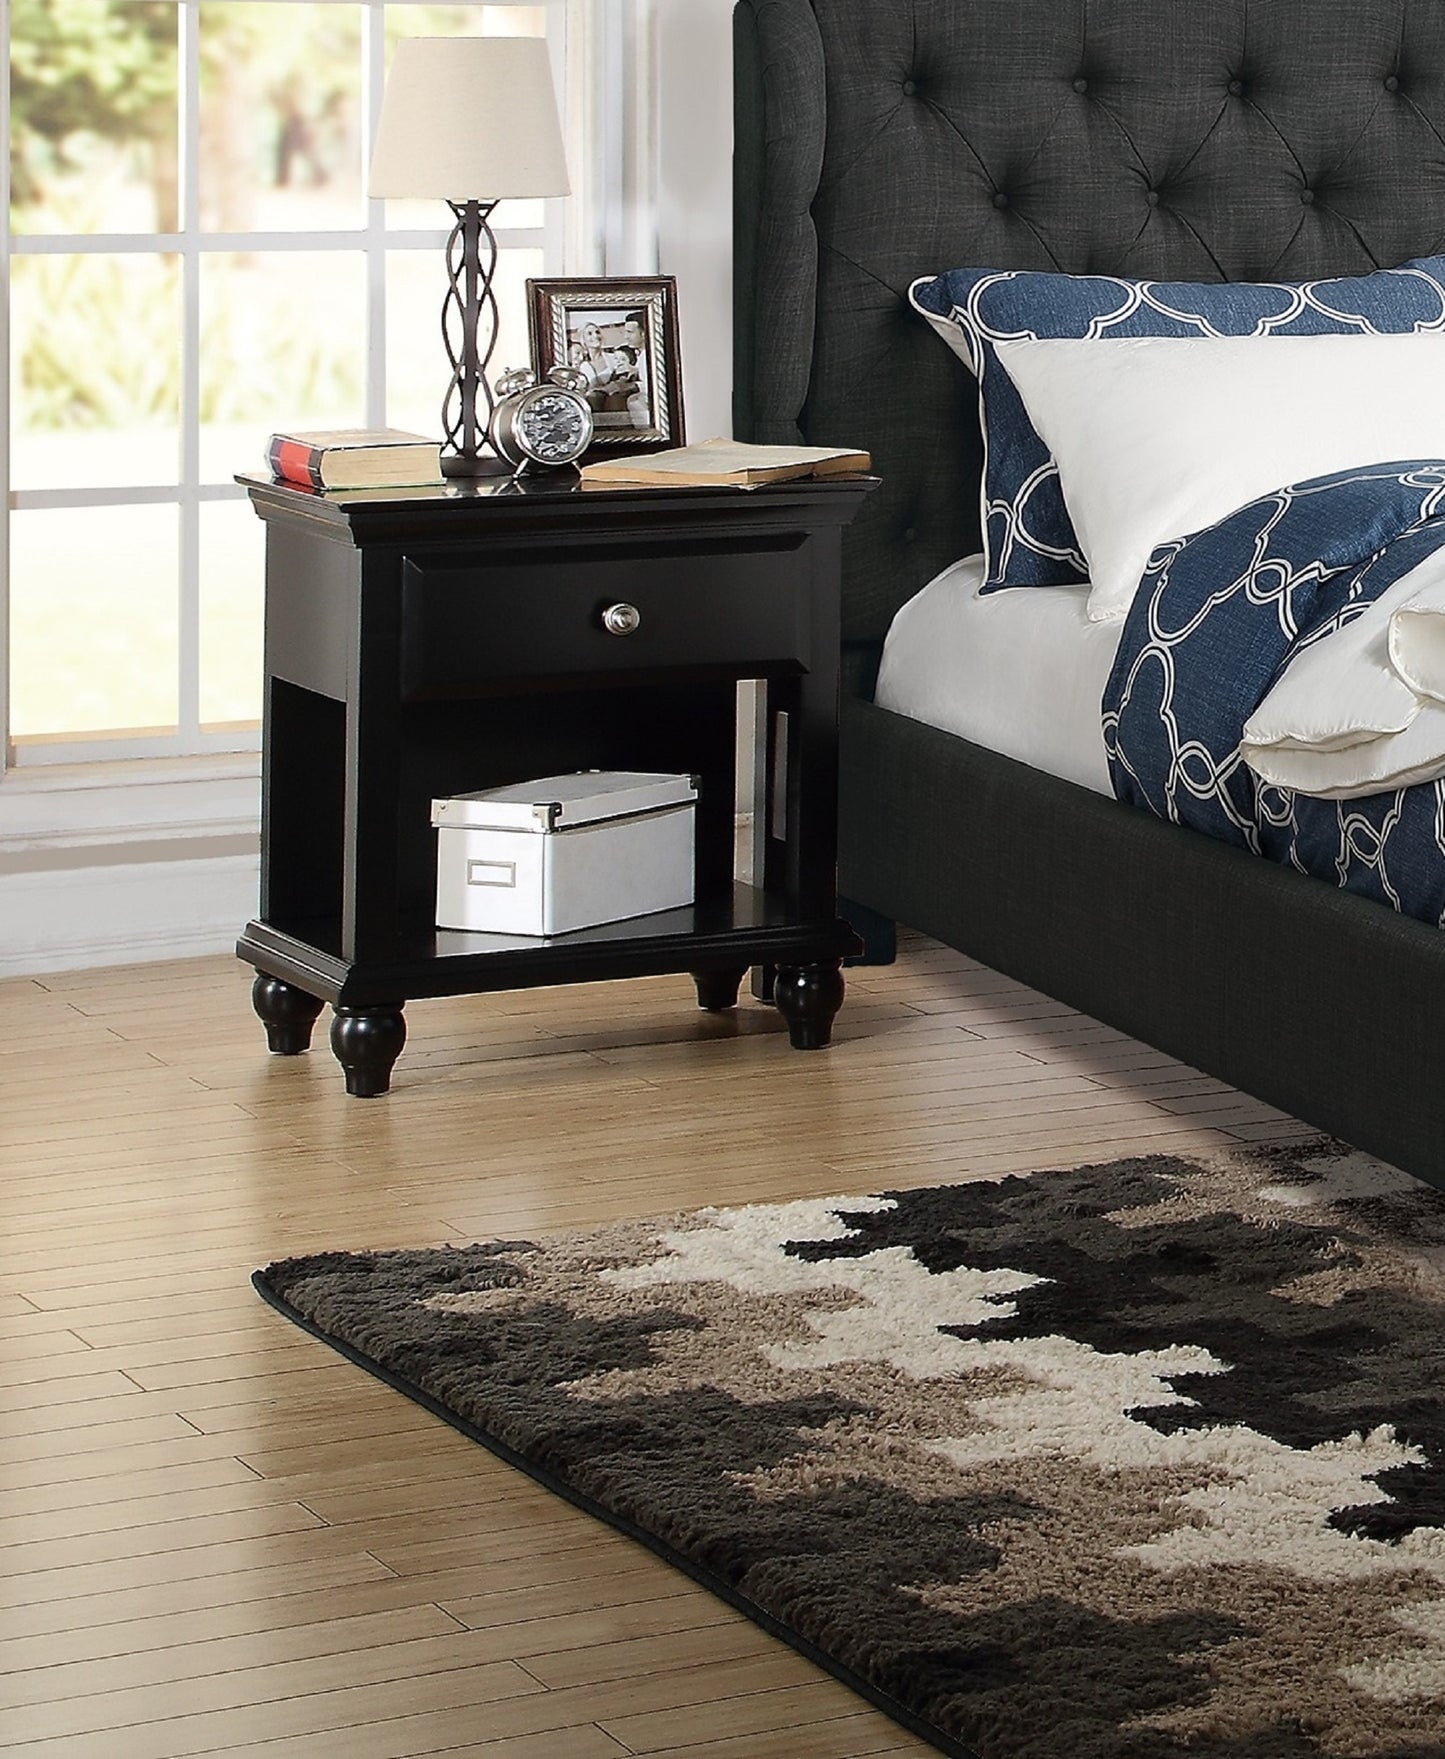 Modern Bedroom Nightstand Black Color Wooden 1 Drawers